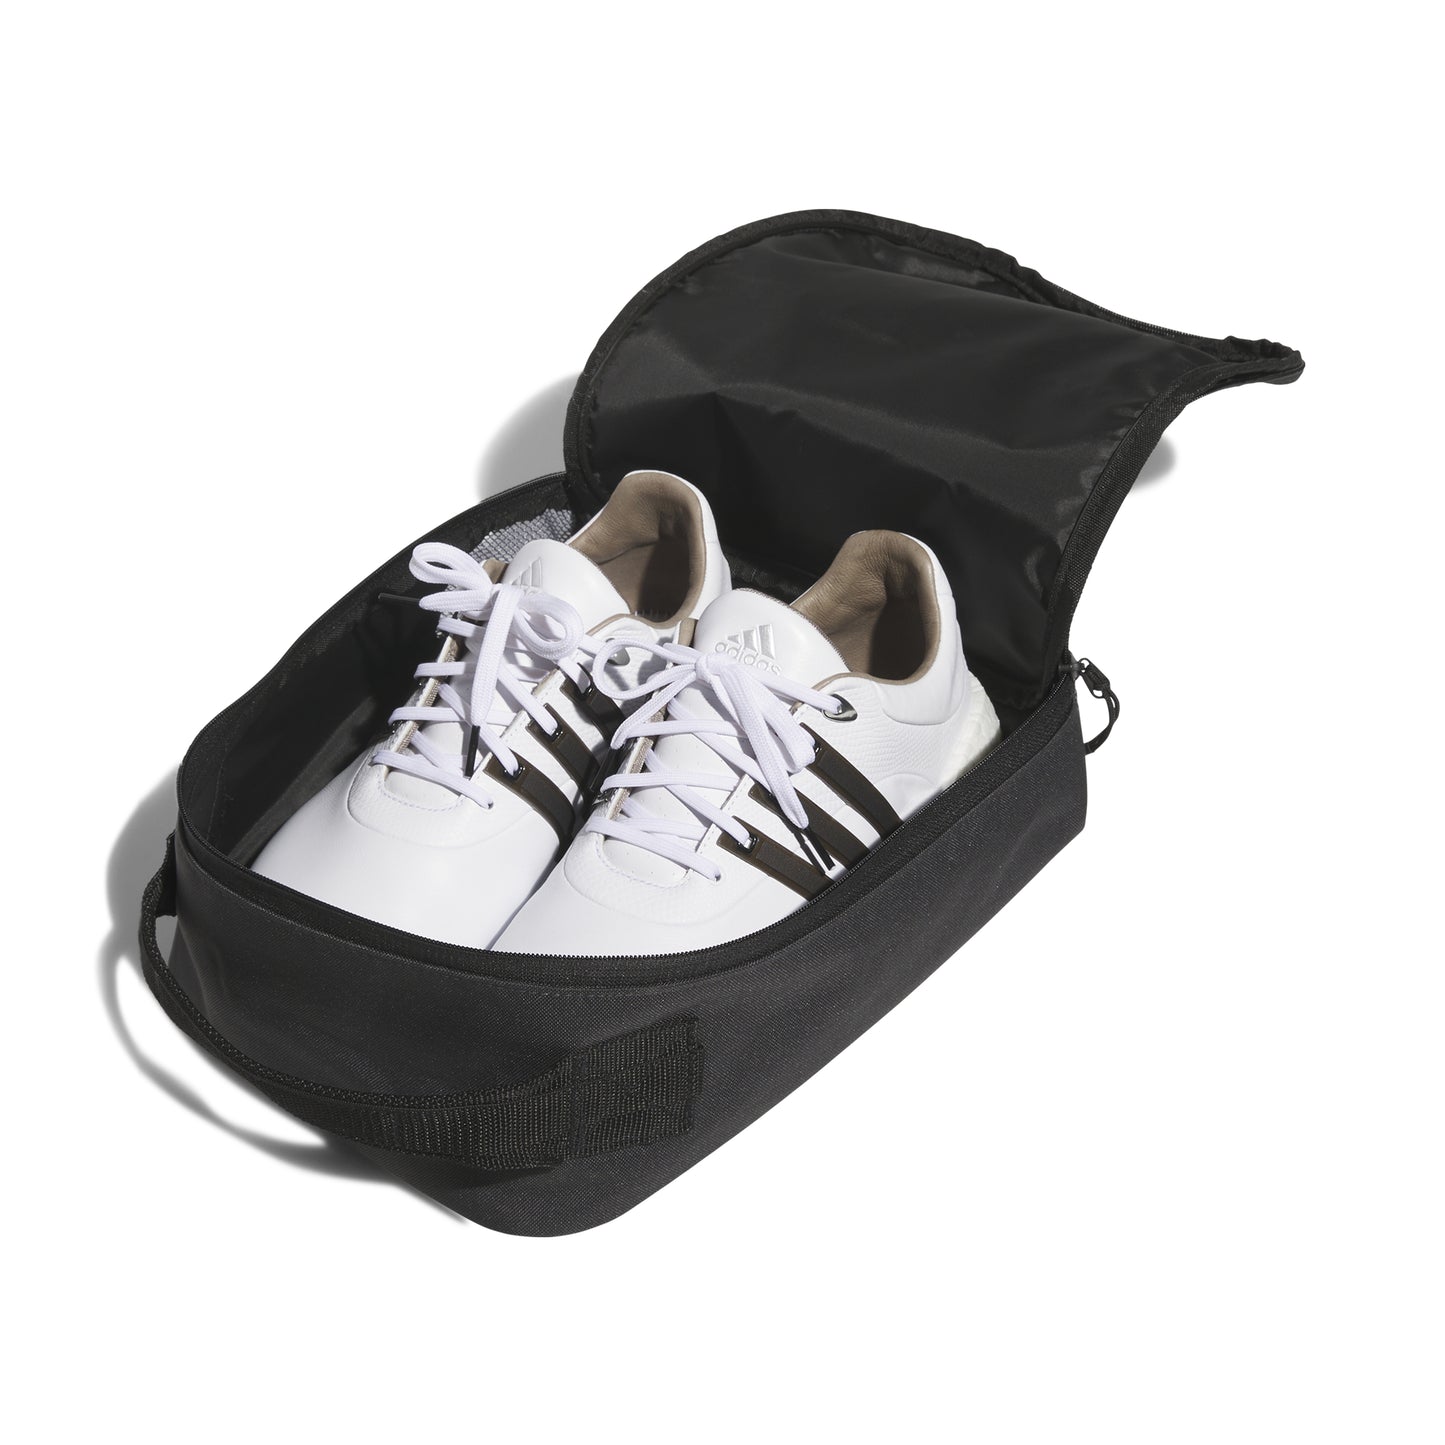 adidas Ladies Golf Shoe Bag in Grey Five